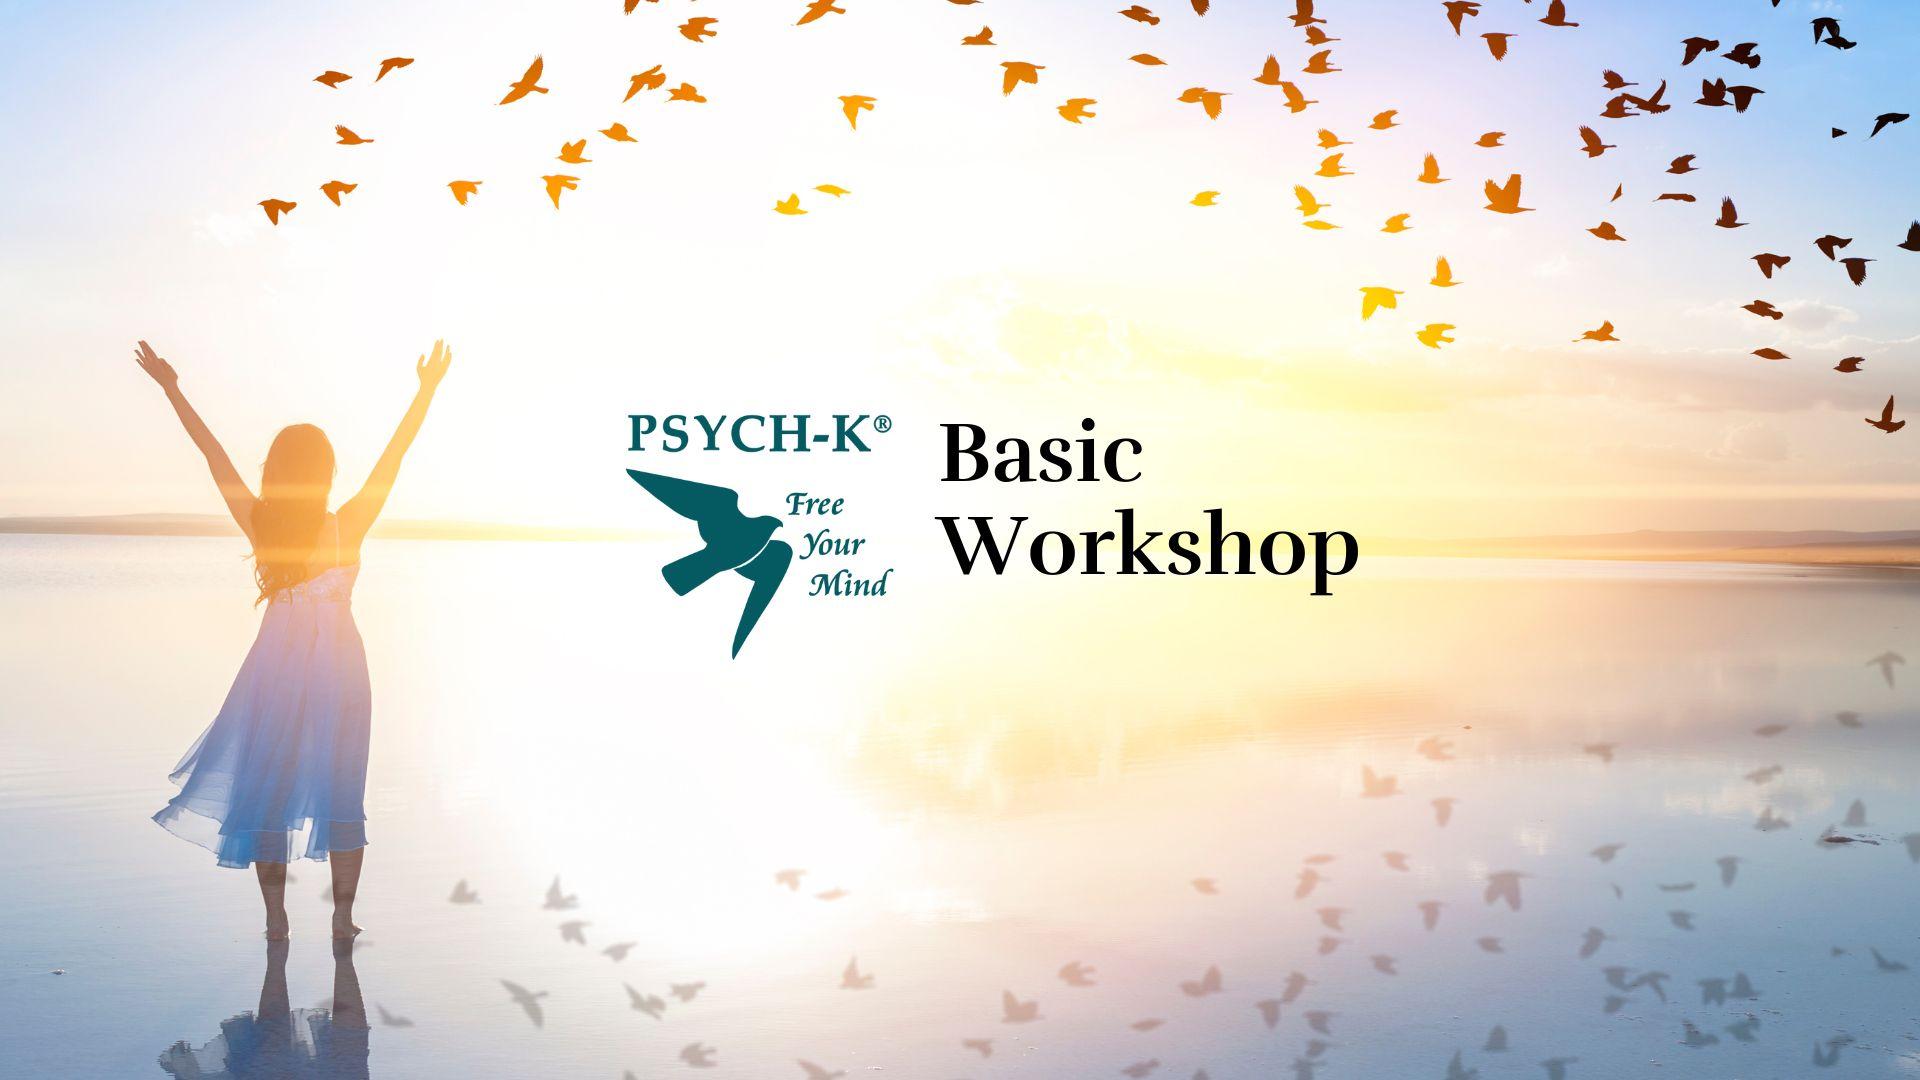 Basic Workshop